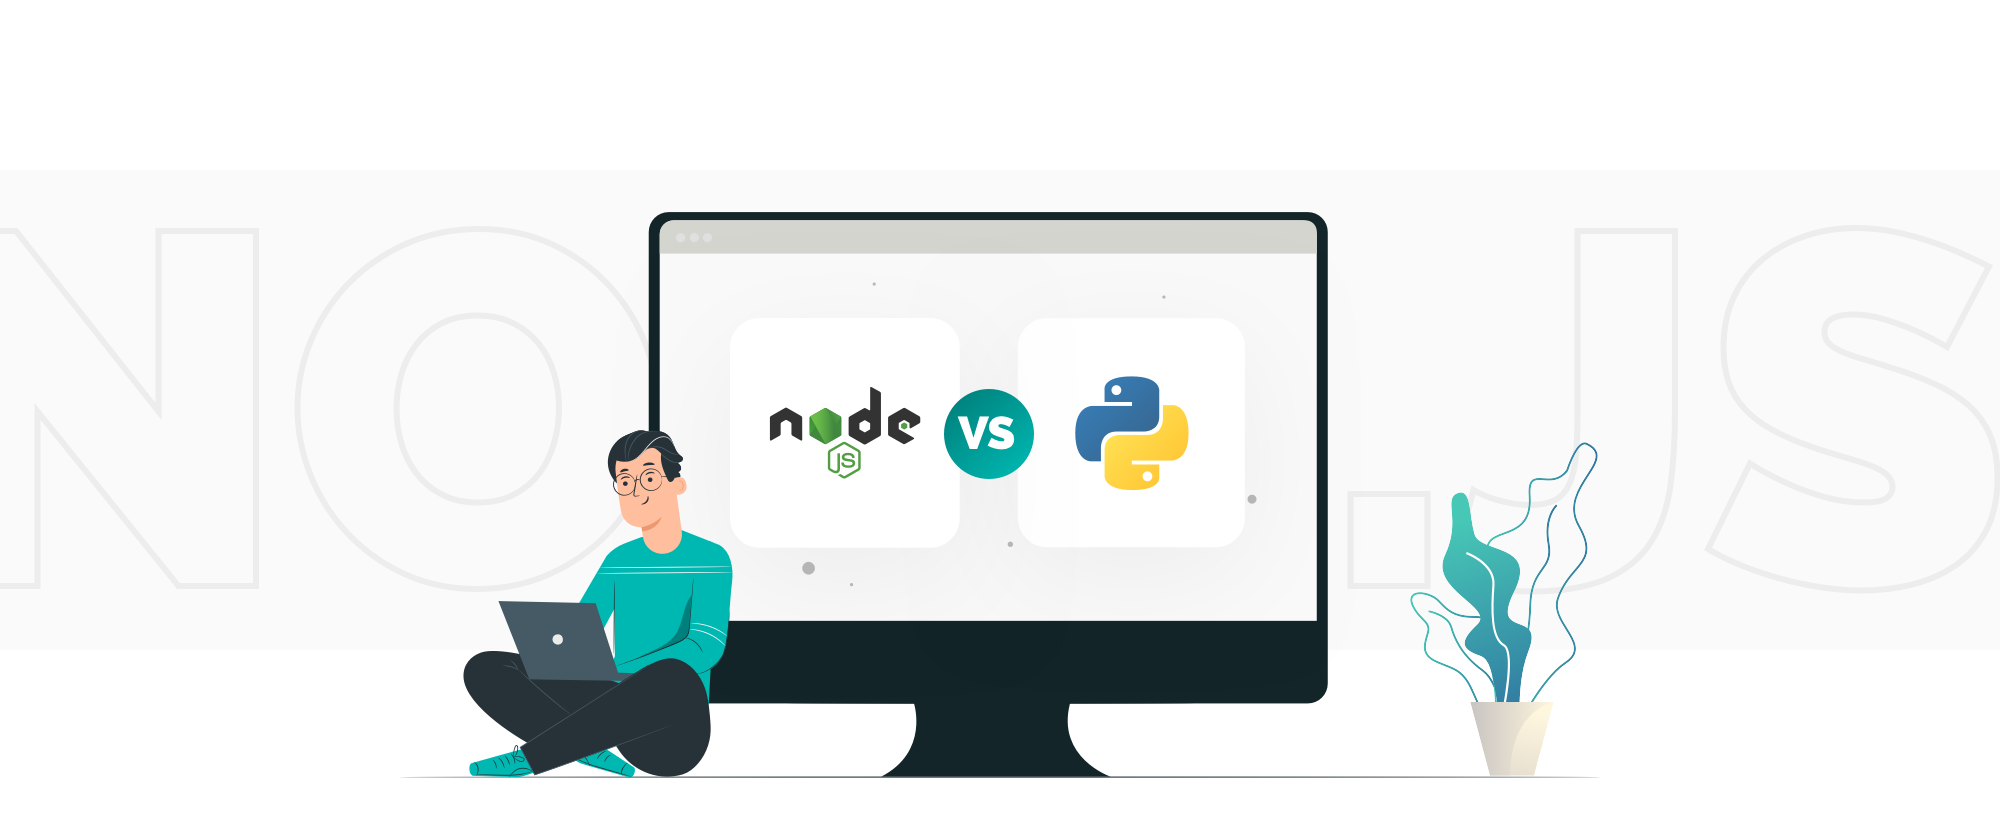 node vs python - node.js vs python